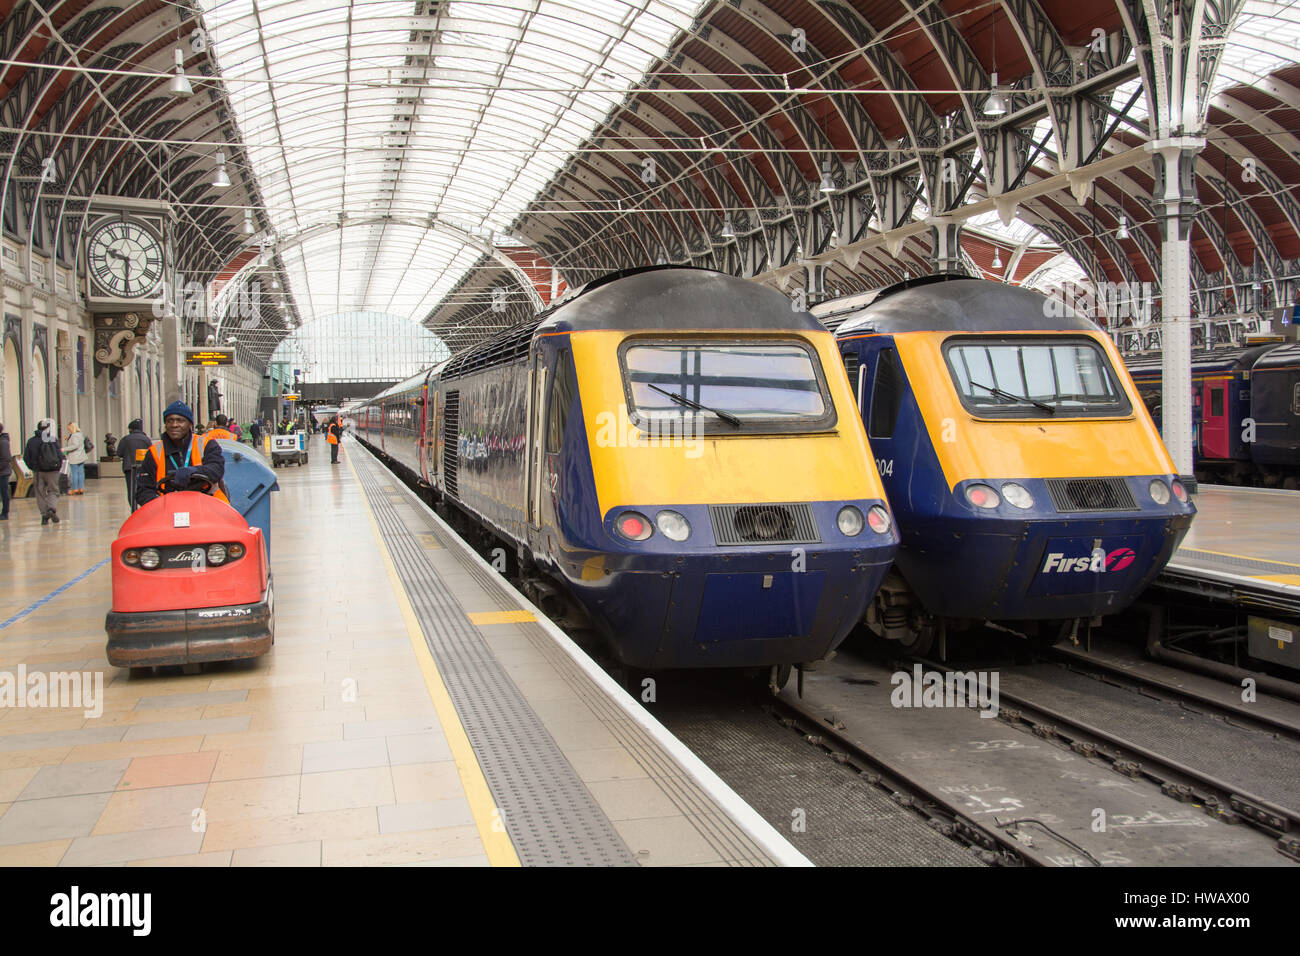 Great Western Railway HST trains waiting to depart at Paddington Station, London, UK Stock Photo